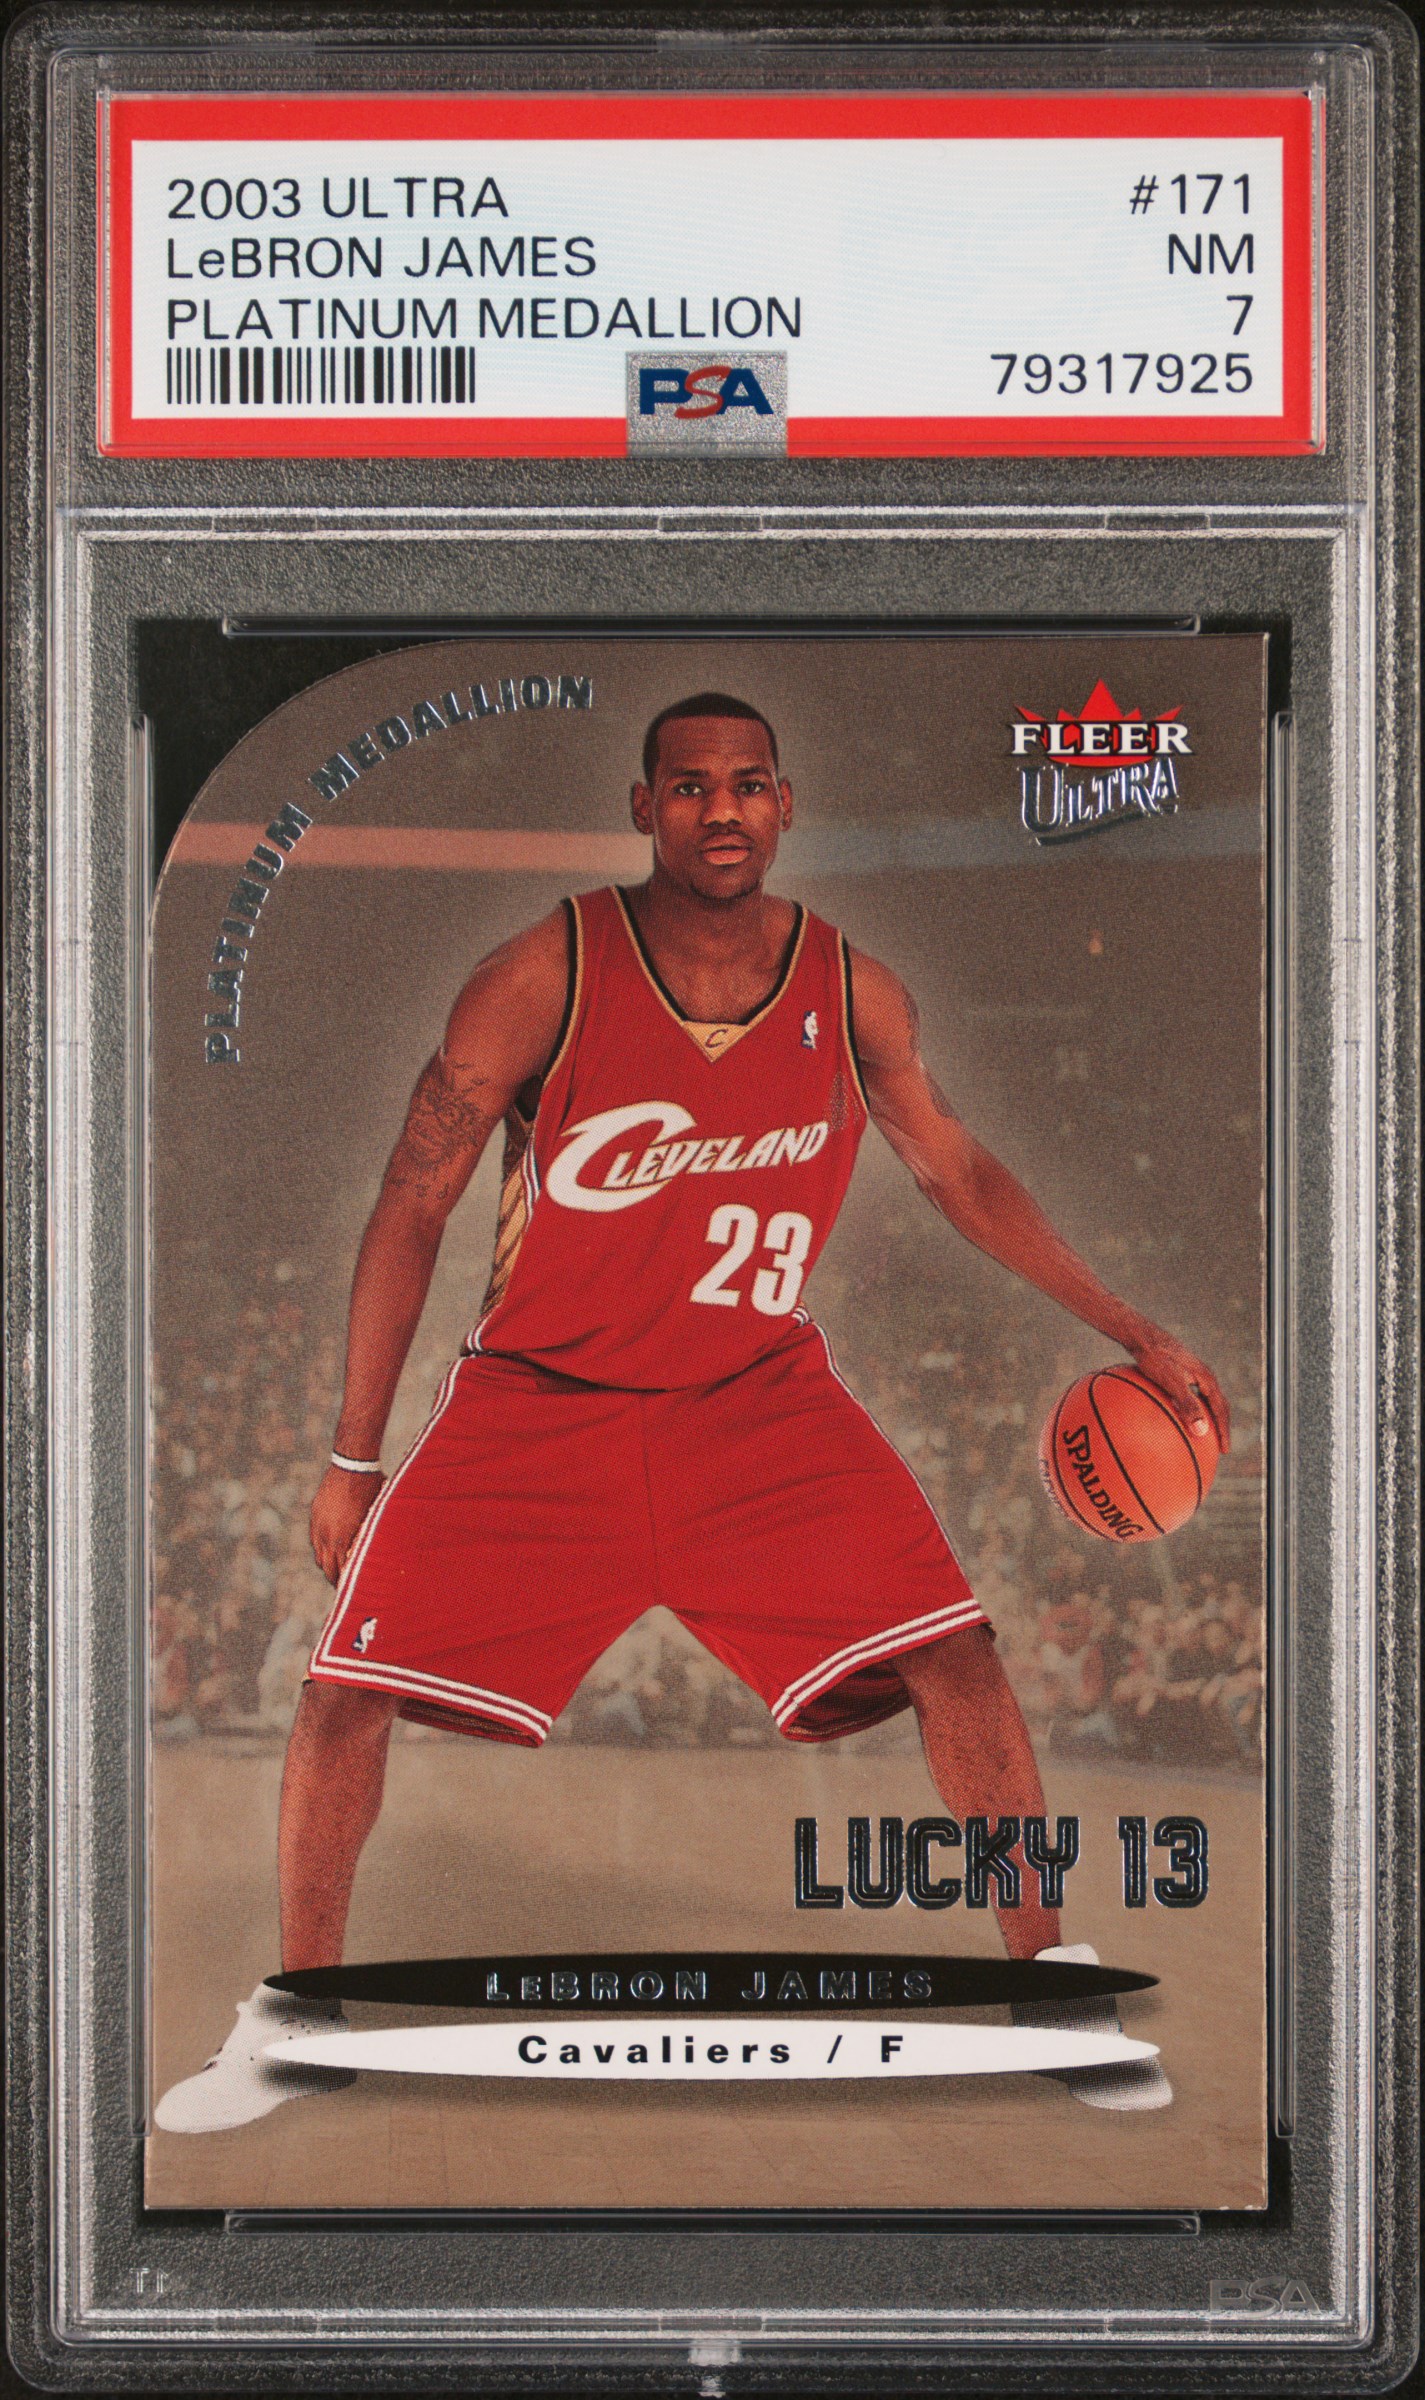 2003-04 Fleer Ultra Platinum Medallion #171 LeBron James Rookie Card (#073/100) - PSA NM 7